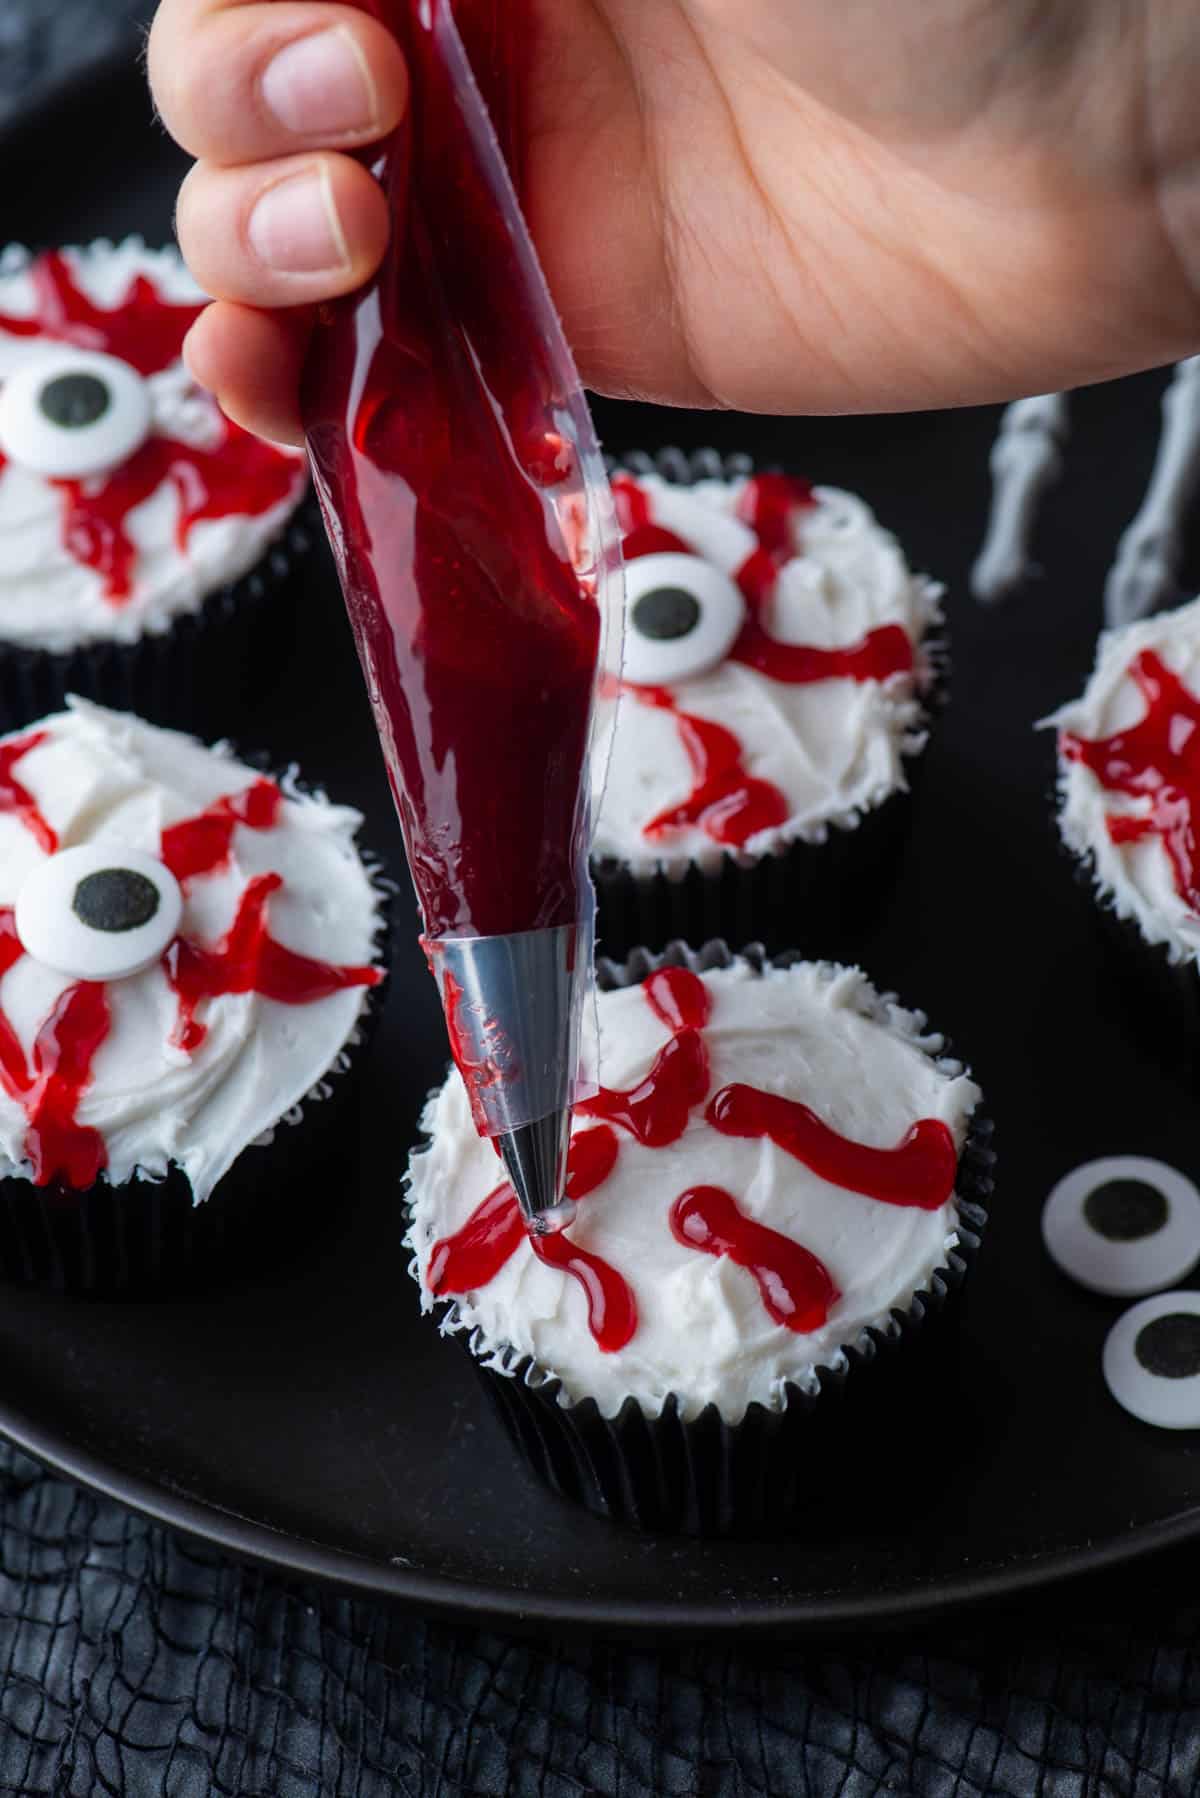 piping red bloody jam onto an eyeball cupcake with more eyeball cupcakes around it